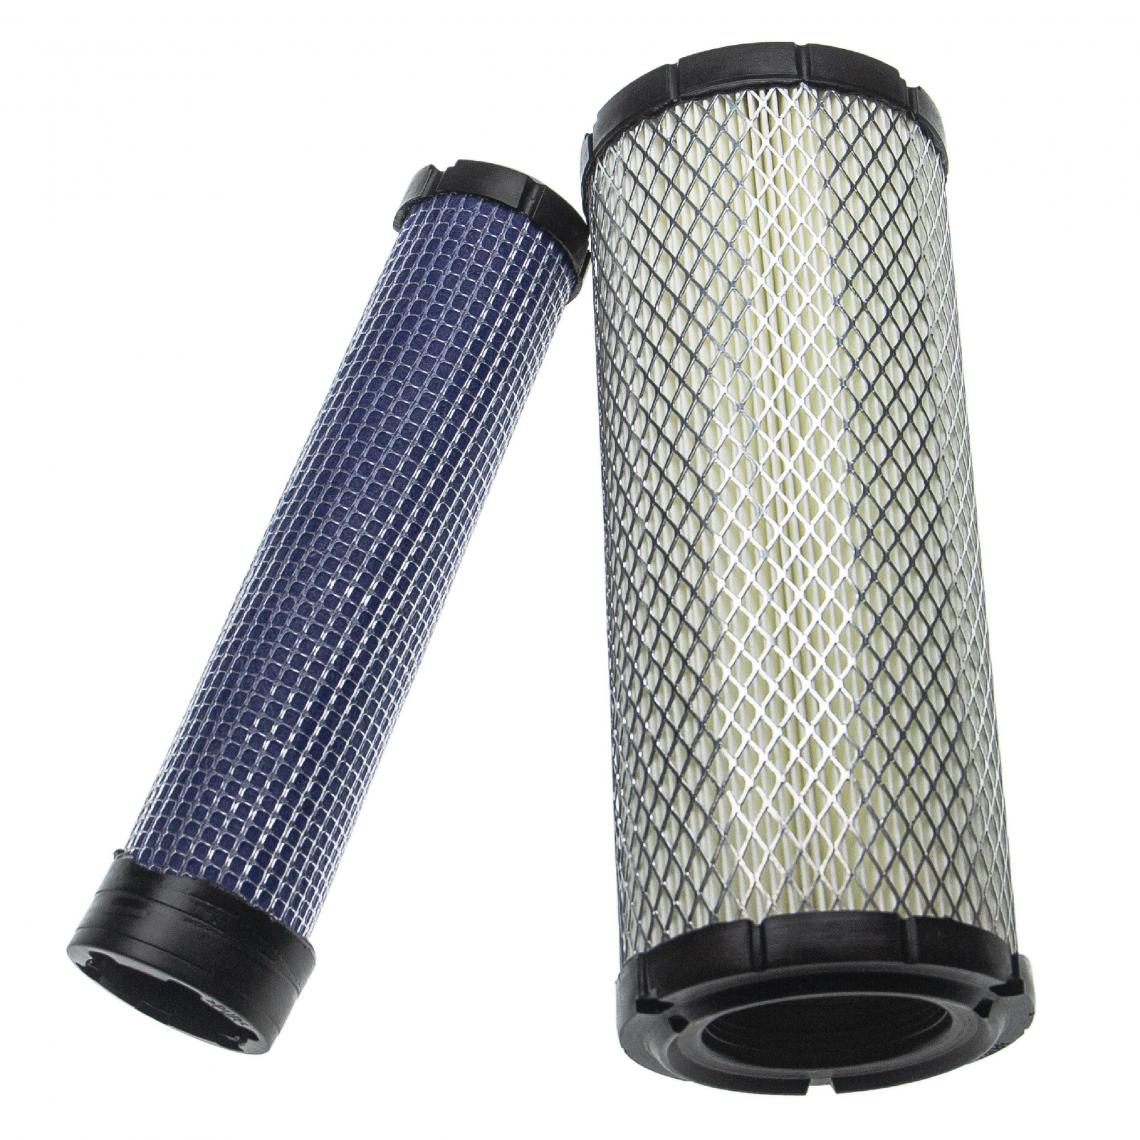 Vhbw - vhbw Lot de filtres compatible avec Toro Reelmaster 5200D engin de chantier; 1x filtre interne, 1x filtre extérieur - Autre appareil de mesure